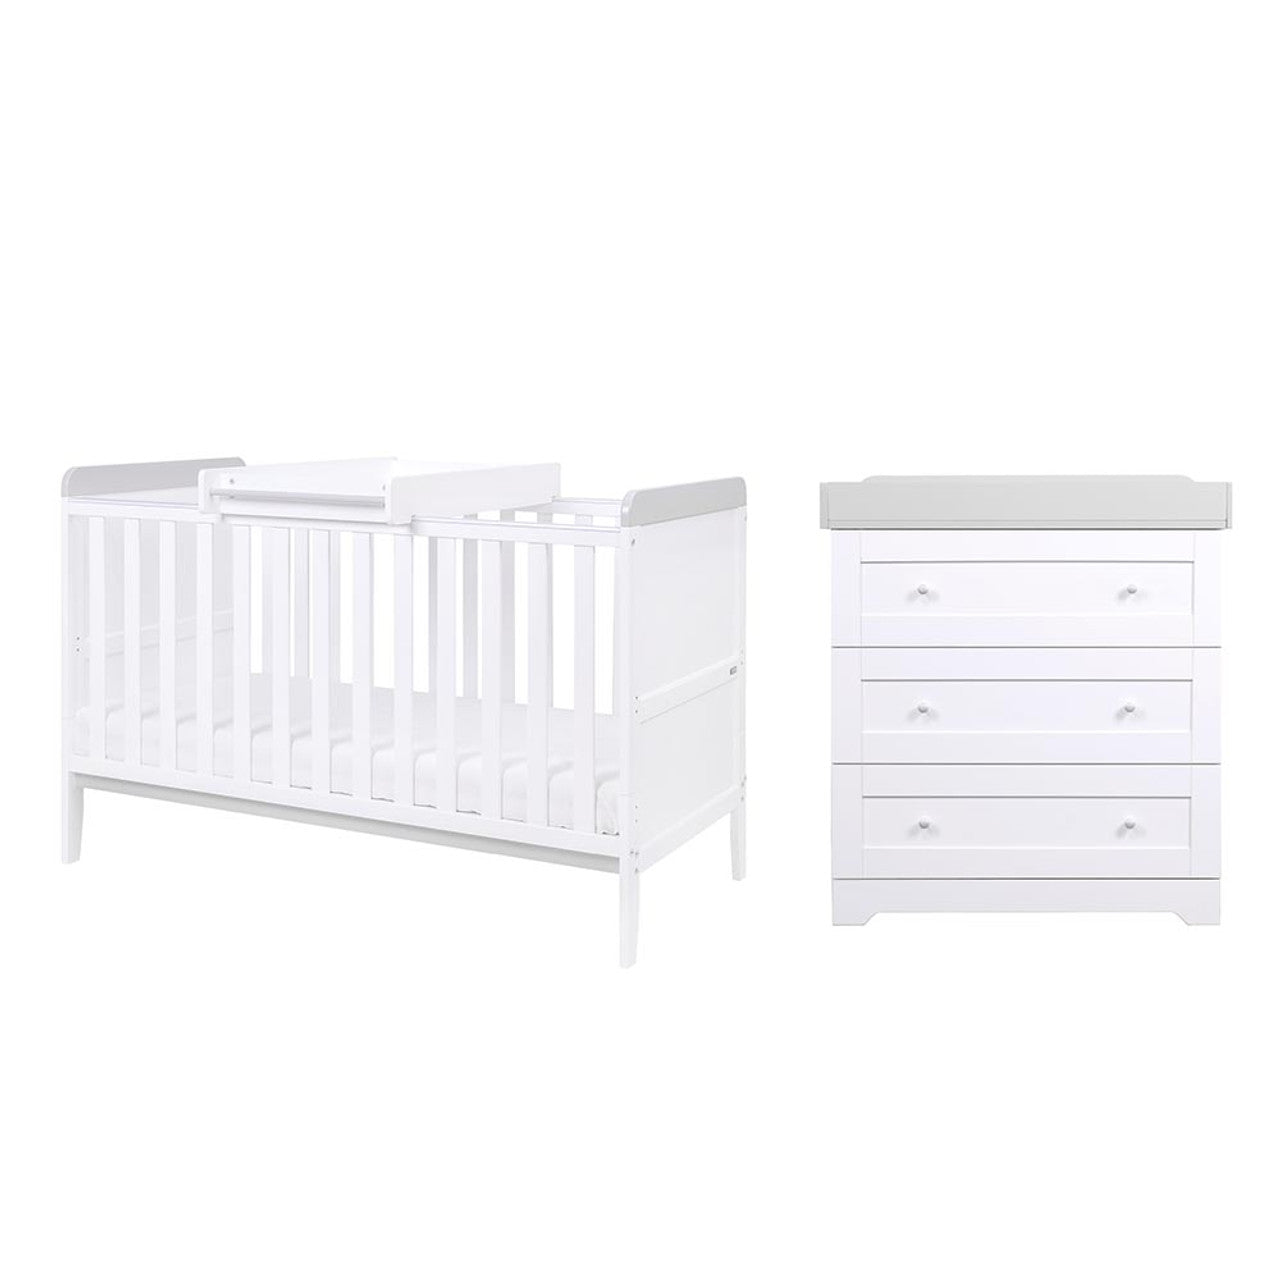 Tutti Bambini Rio 2 Piece Room Set - White/Dove Grey - For Your Little One